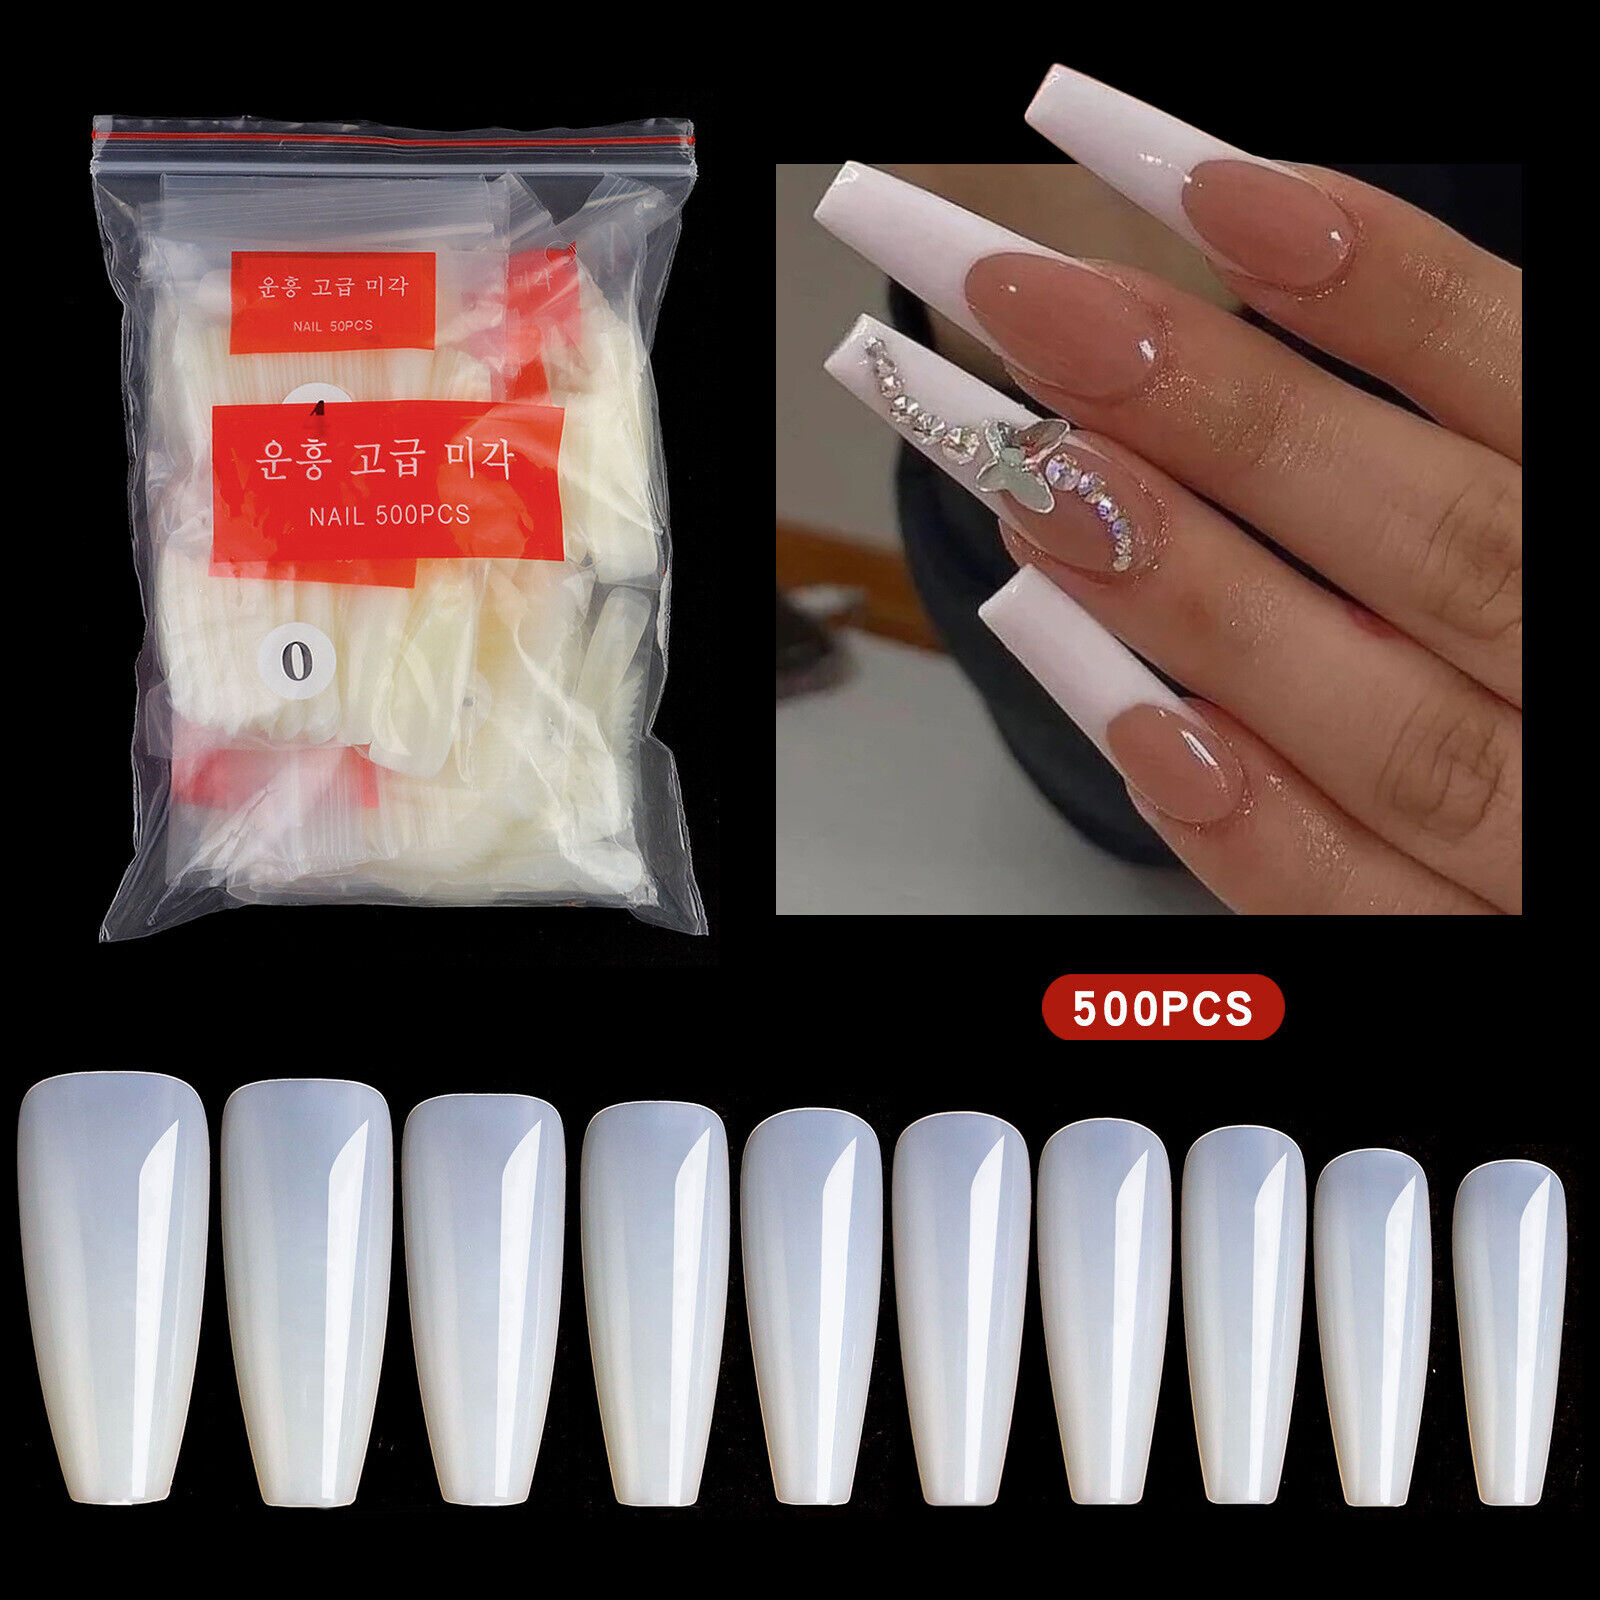 500pcs Clear Natural Full Cover Fake Nails Flat Shape Nail Art Tip 10 Sizes  Gift | eBay